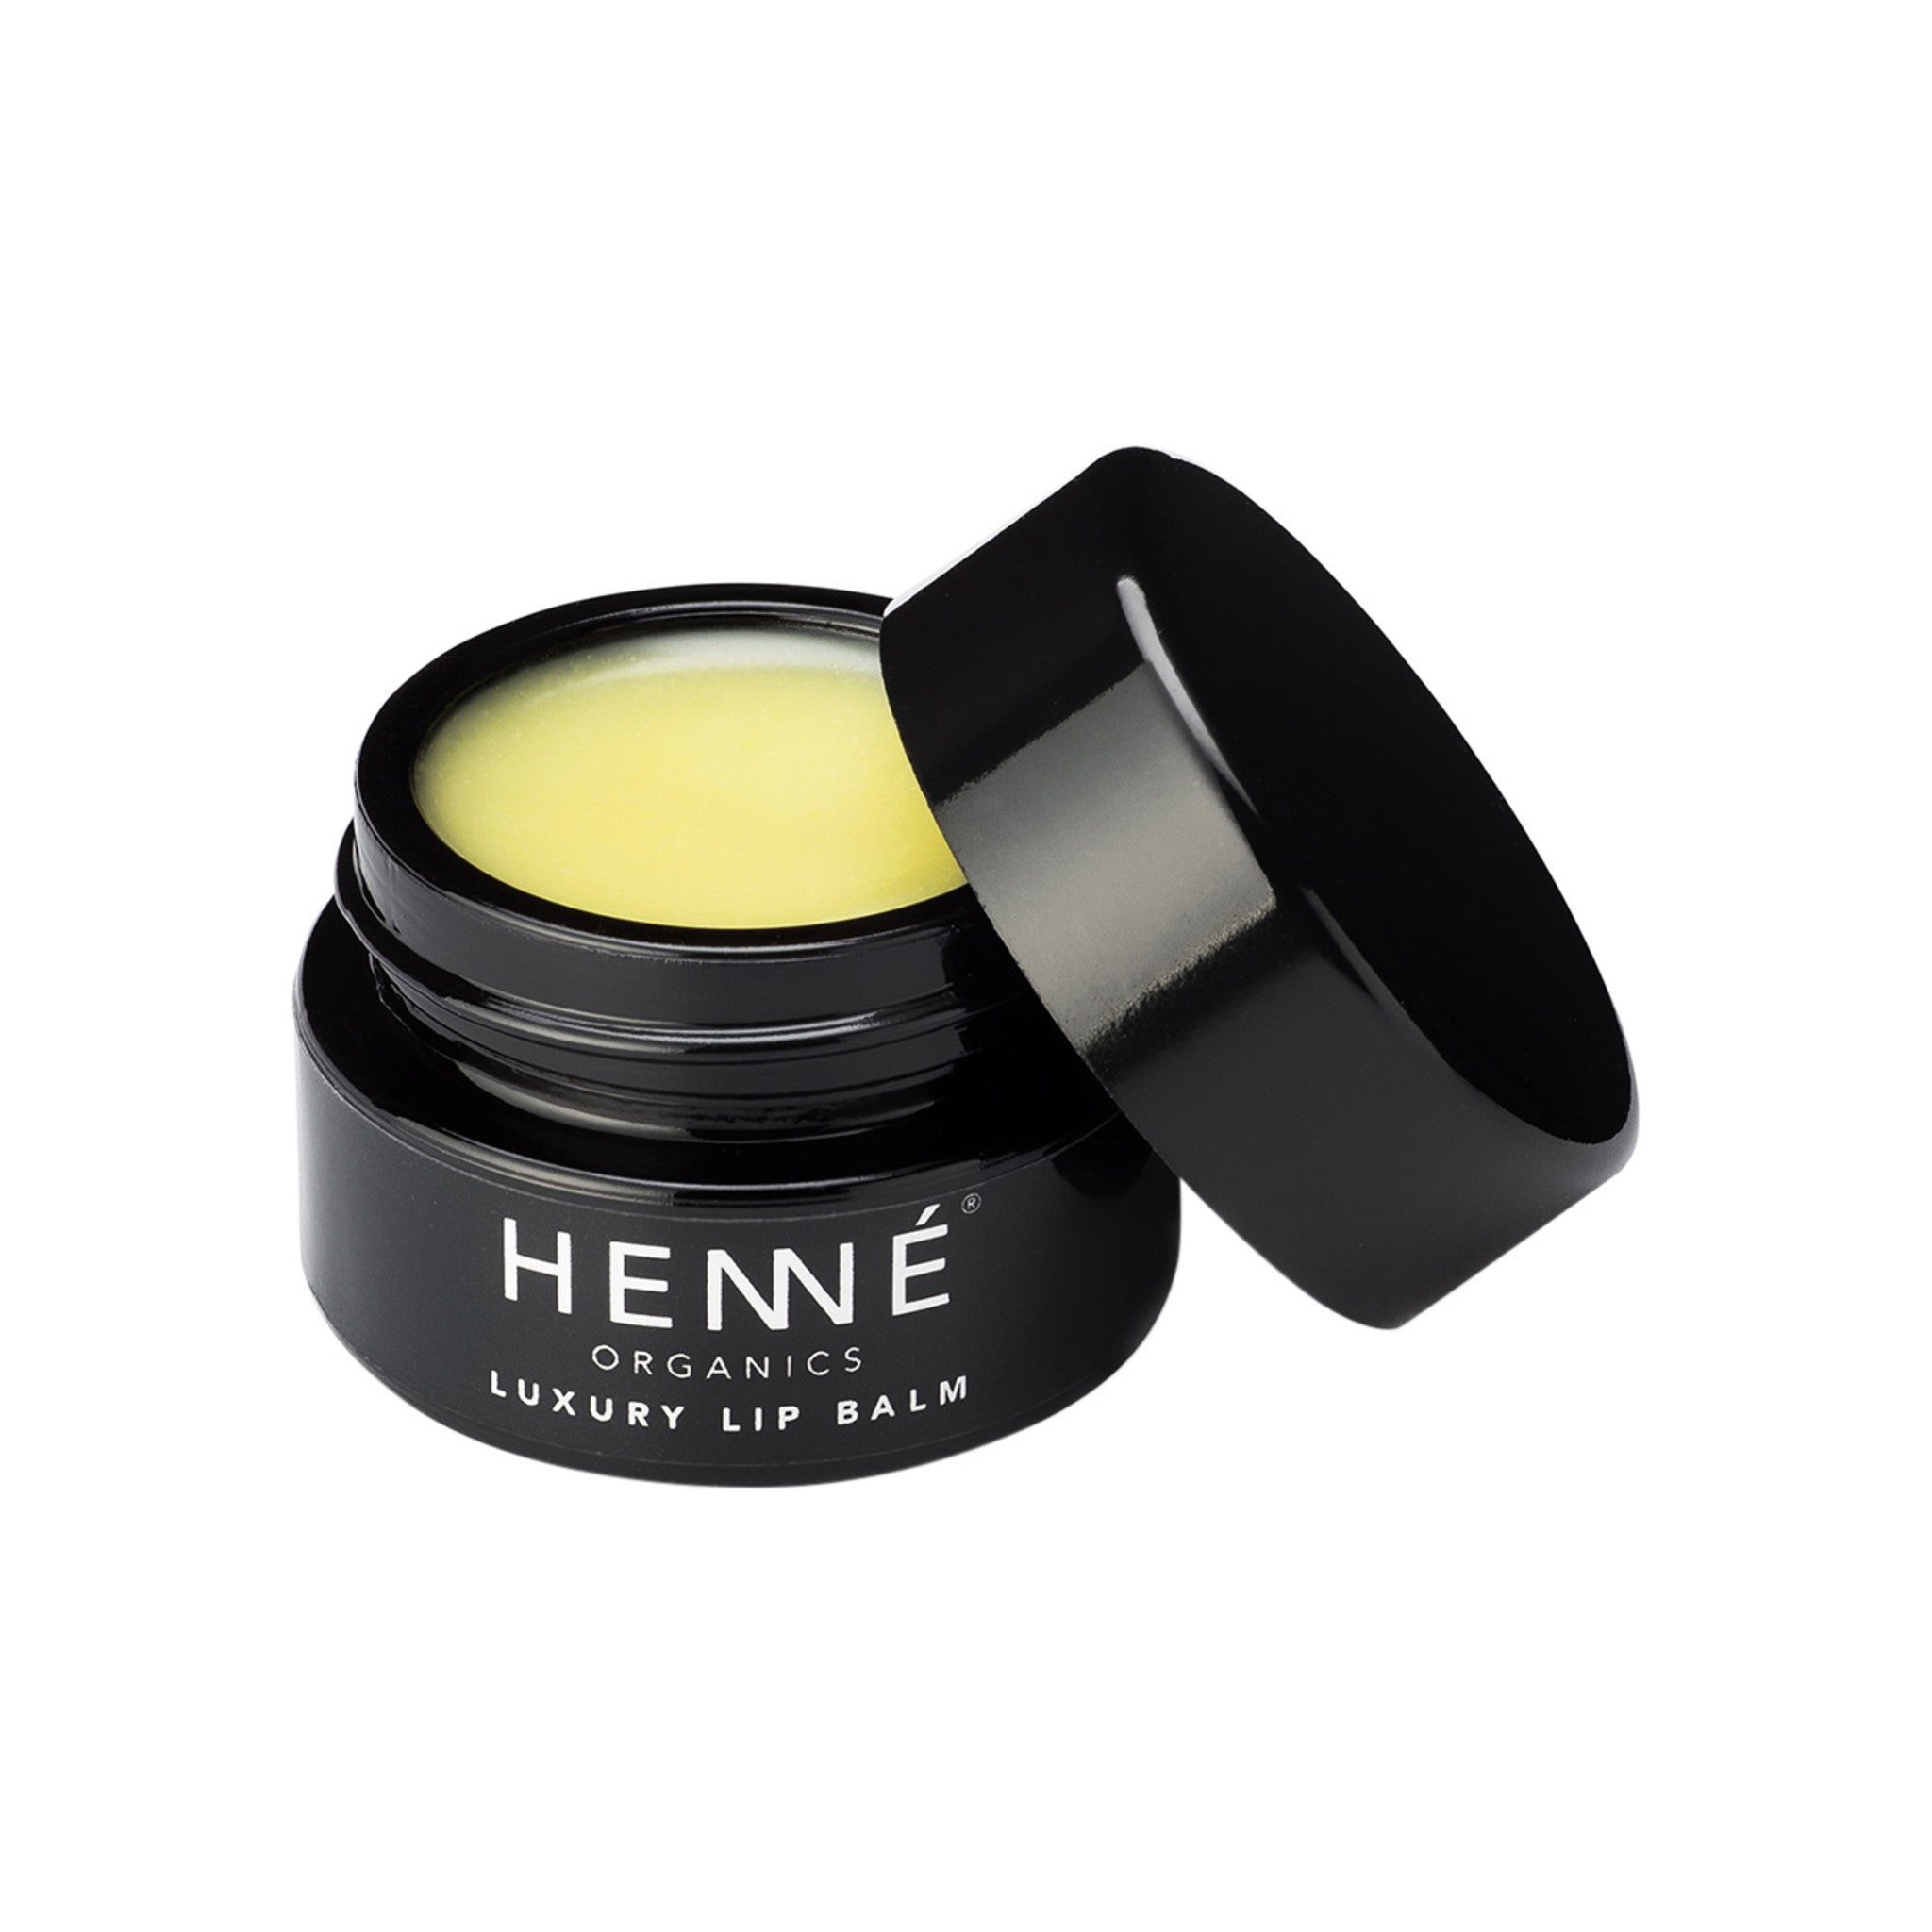 Henne Organics Luxury Lip Balm main image.